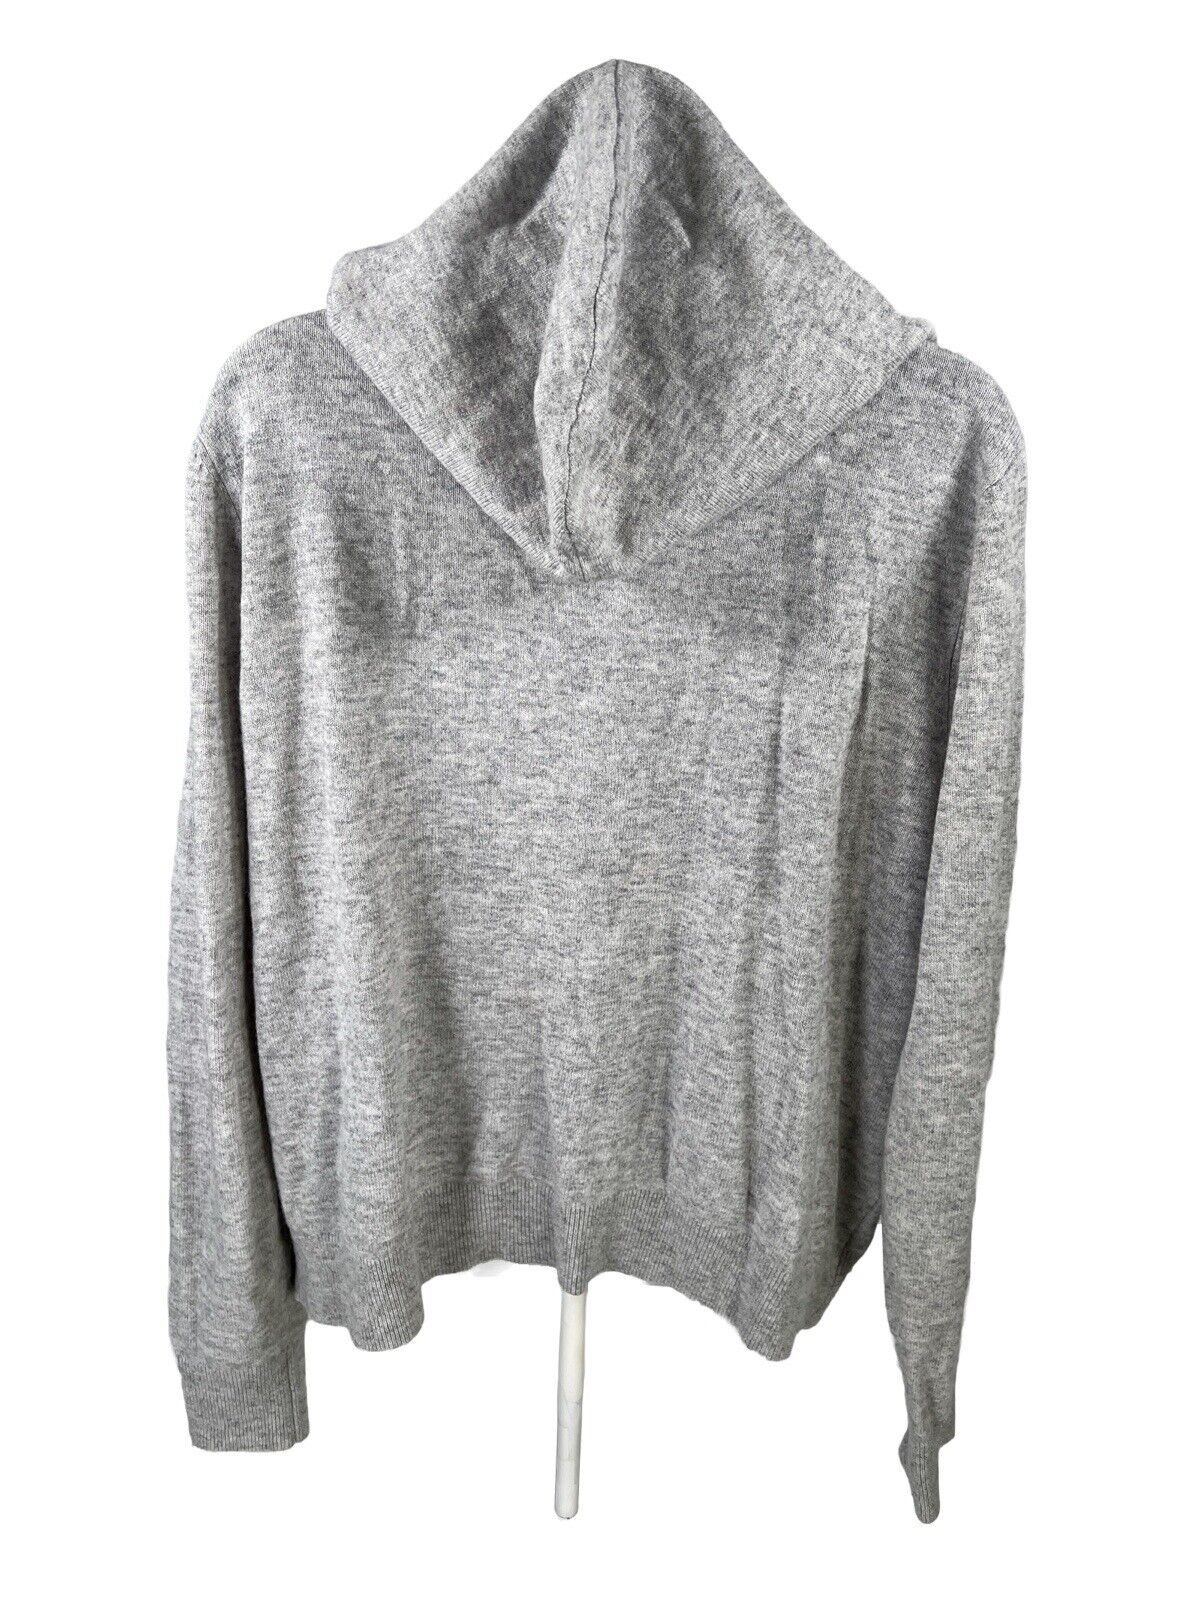 Reiss Women's Gray Cashmere Blend Full Zip Sweatshirt - L